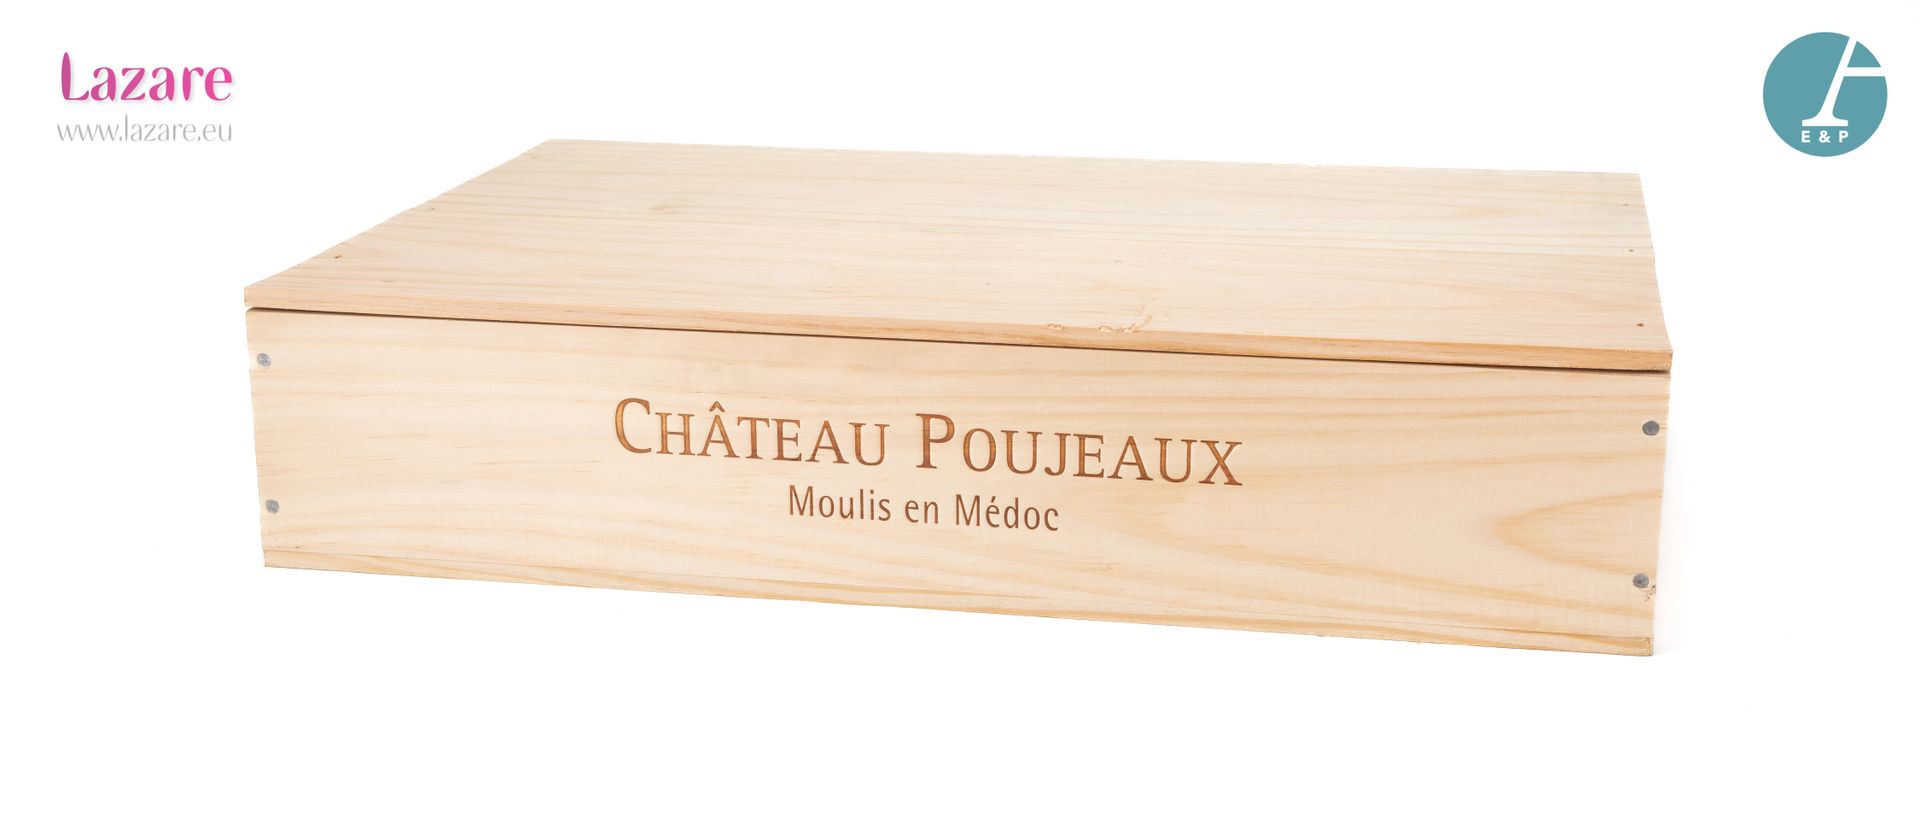 Null 6 bottiglie CHATEAU POUJEAUX (cassa di legno originale) Moulis 2018